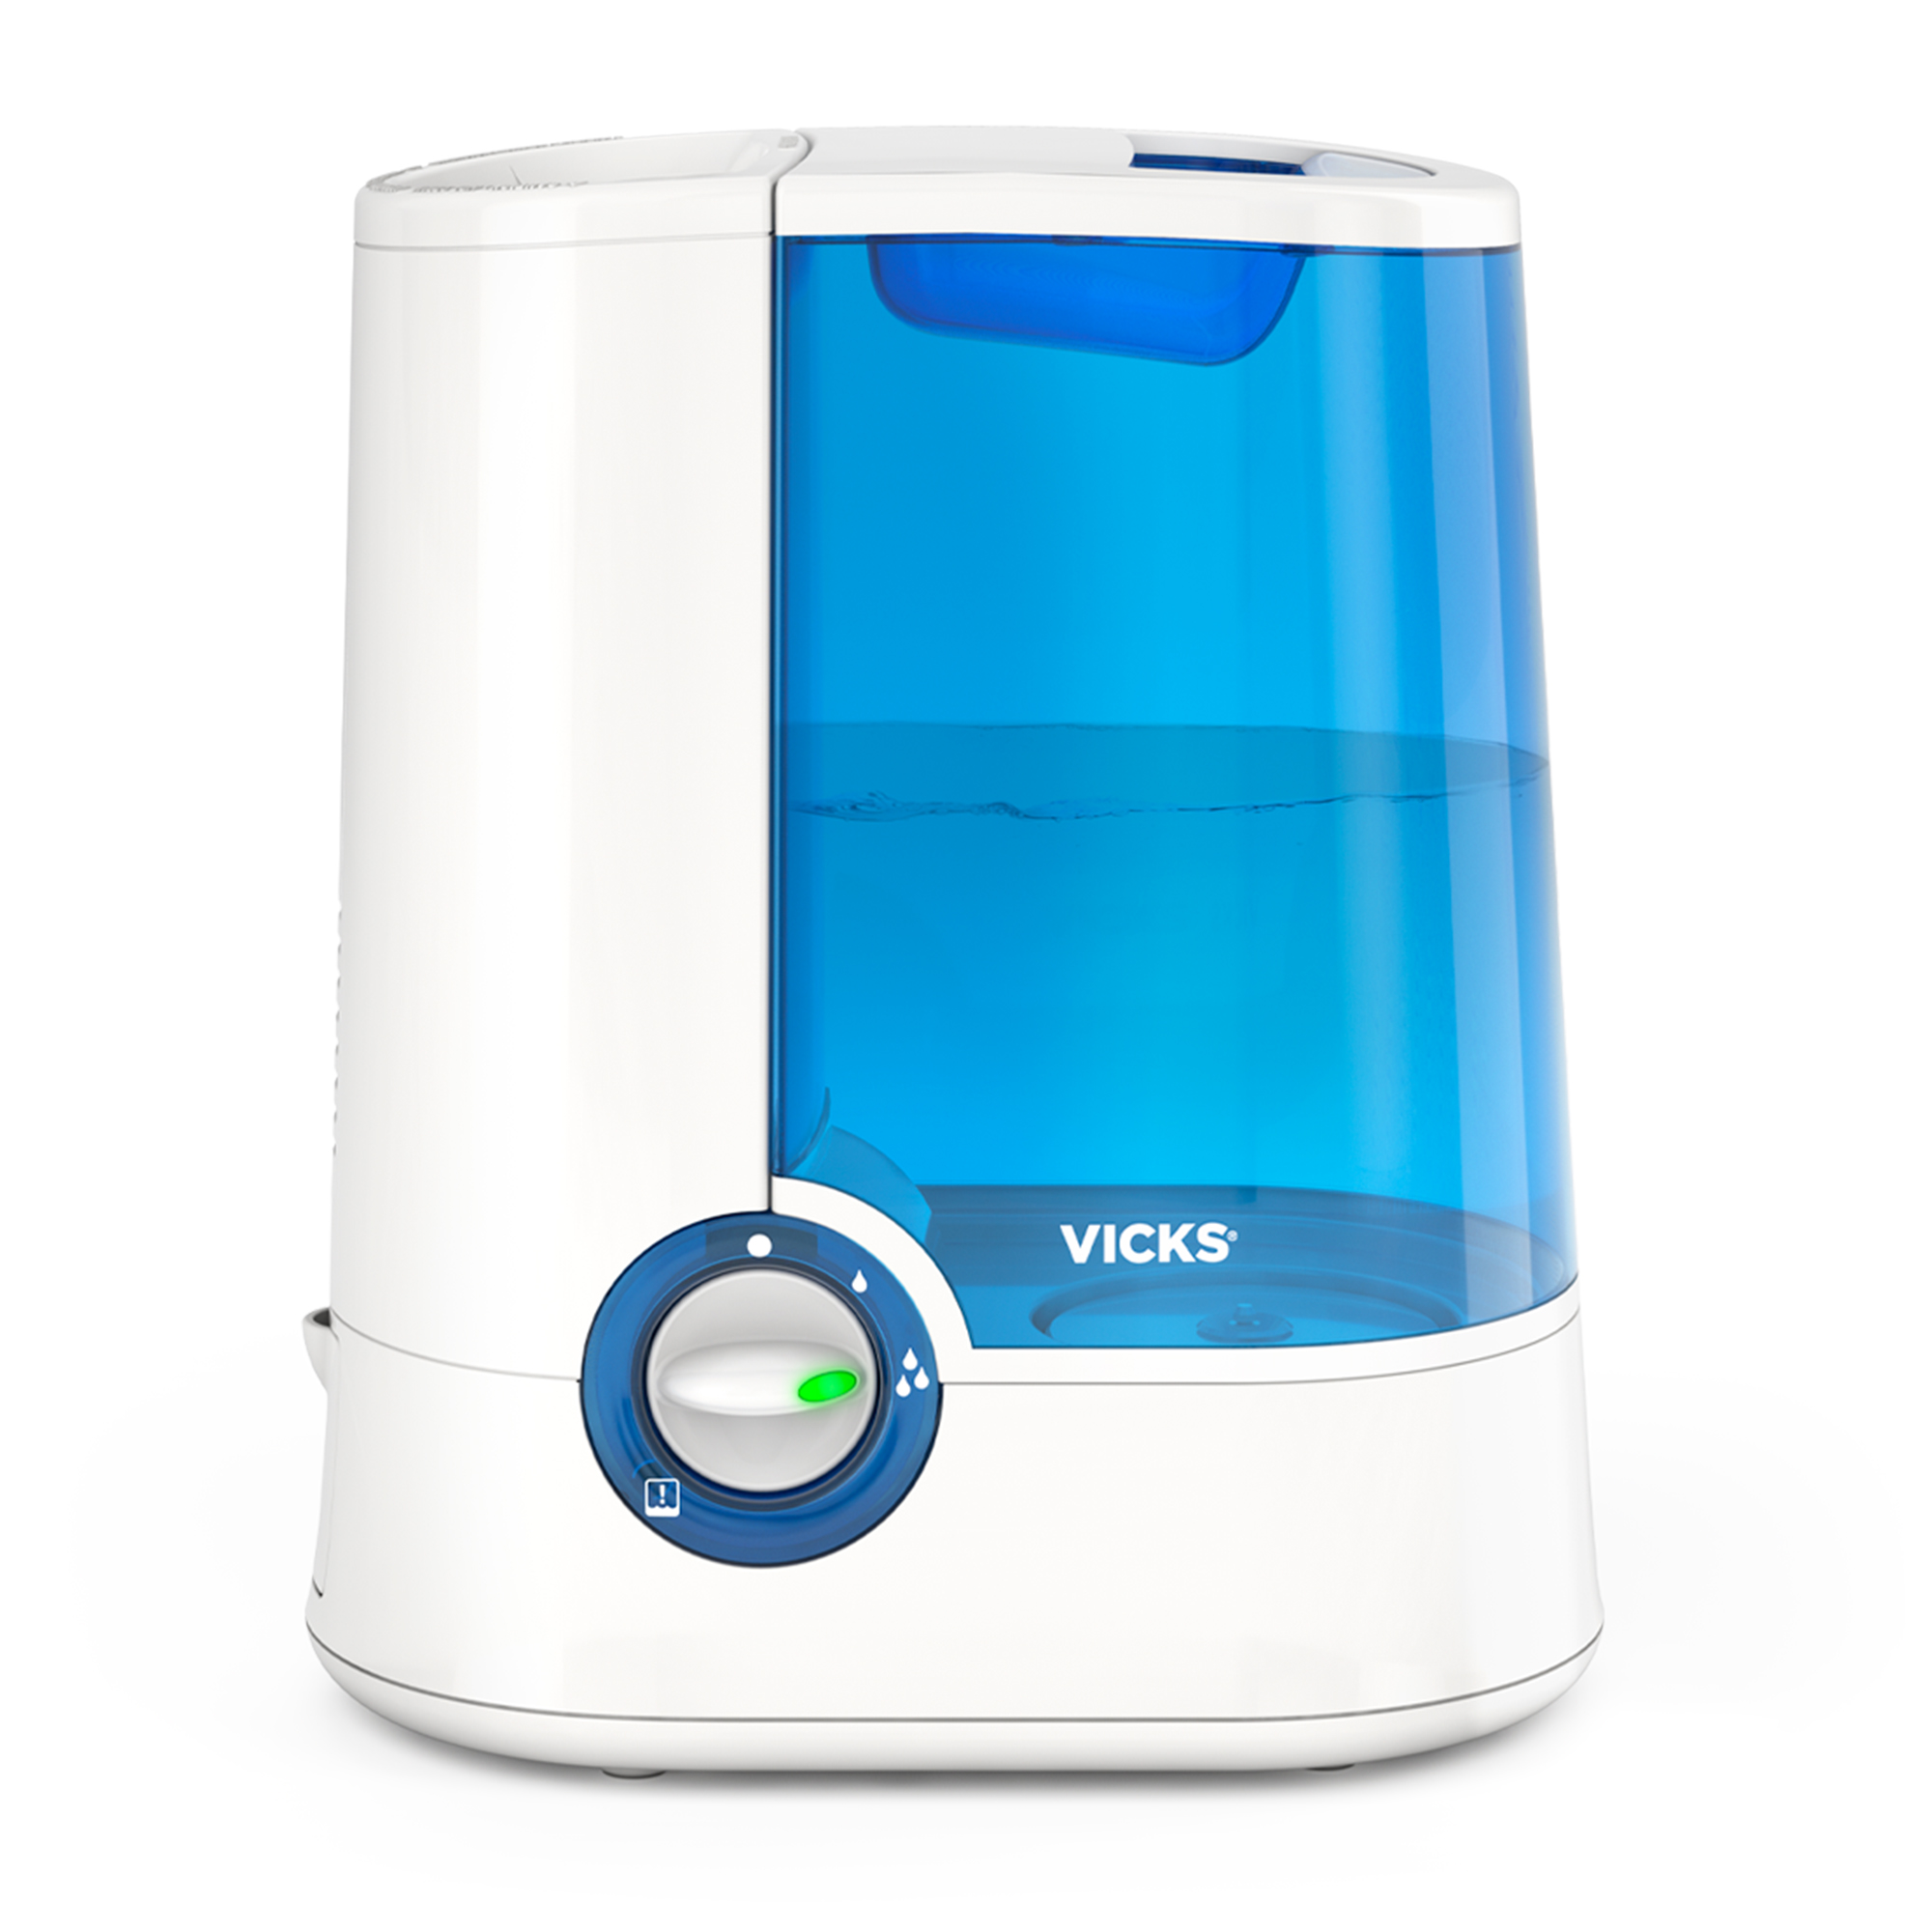 Vicks Warm Mist Humidifier, 250 sq ft, Blue, V750 - image 1 of 11